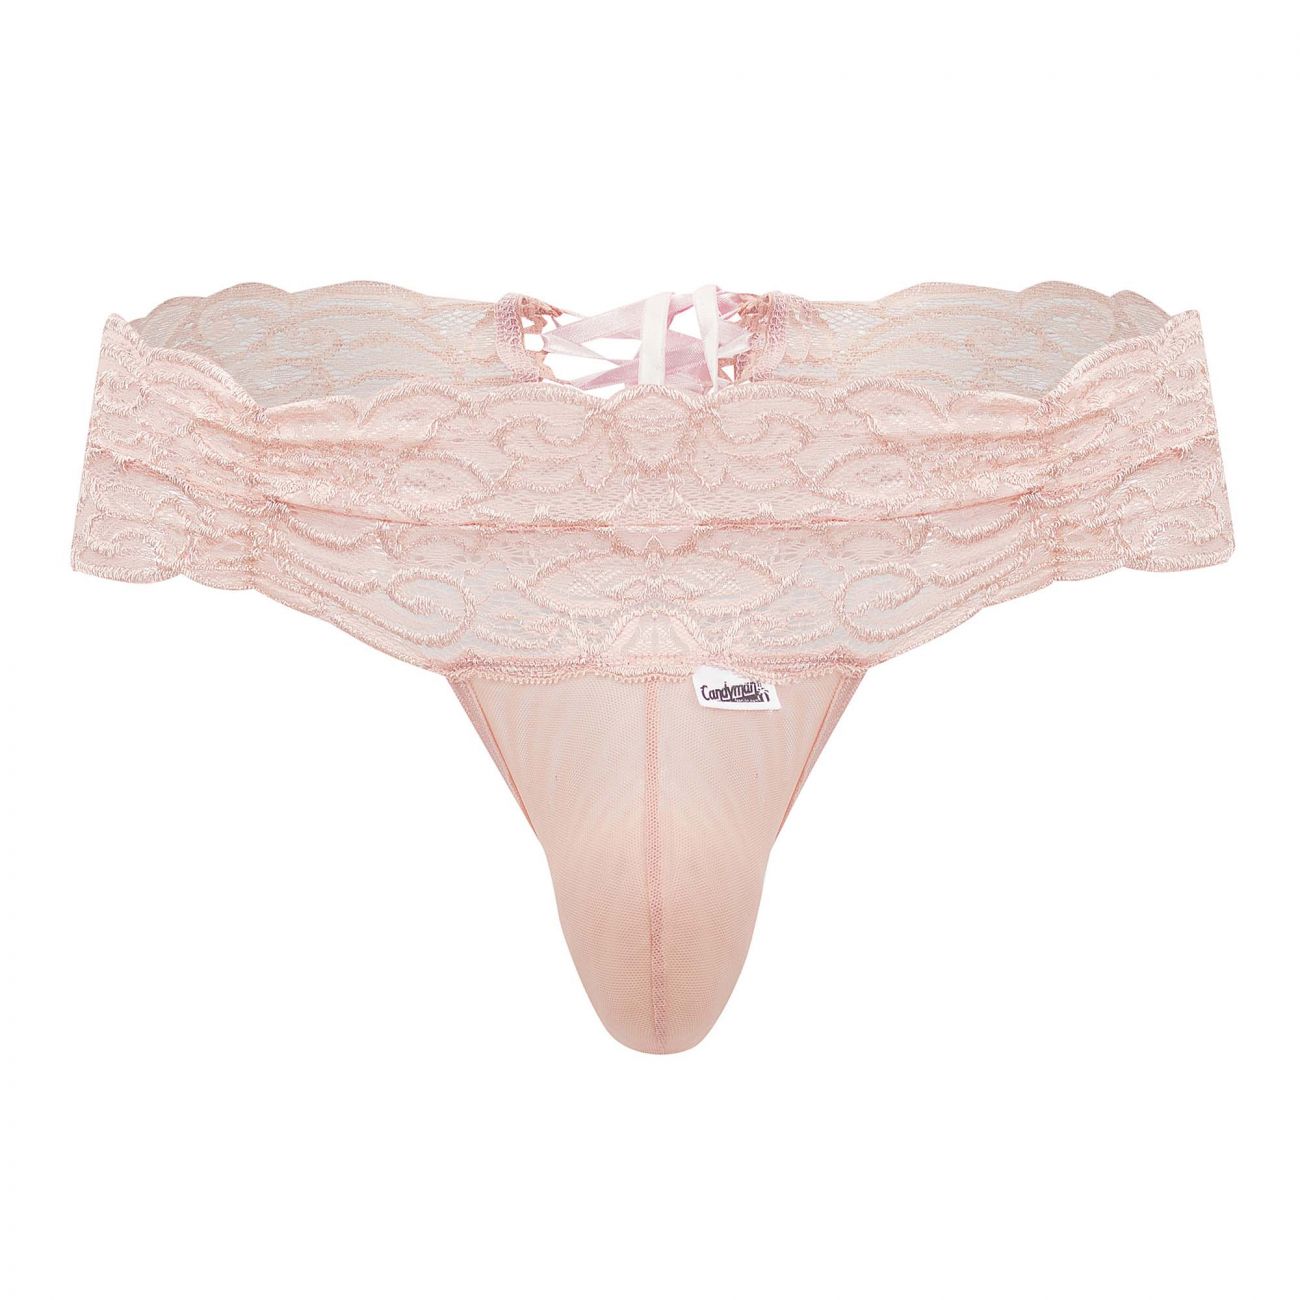 CandyMan 99595X Lace Thongs Rose Plus Sizes